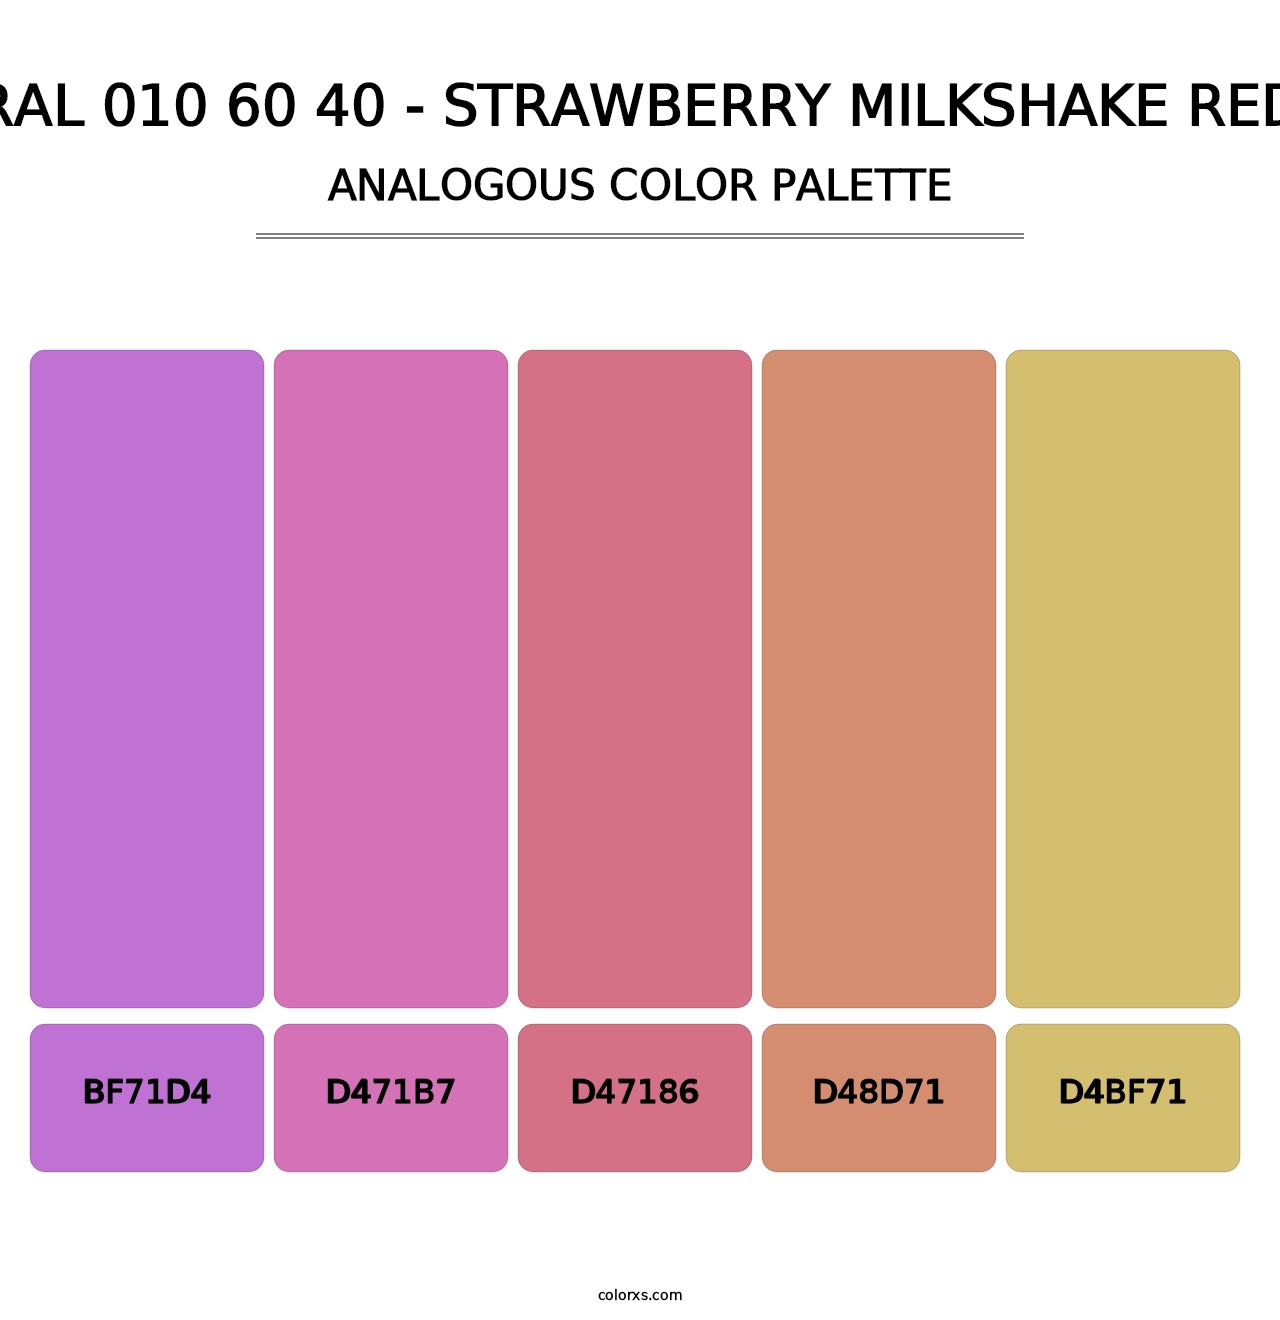 RAL 010 60 40 - Strawberry Milkshake Red - Analogous Color Palette